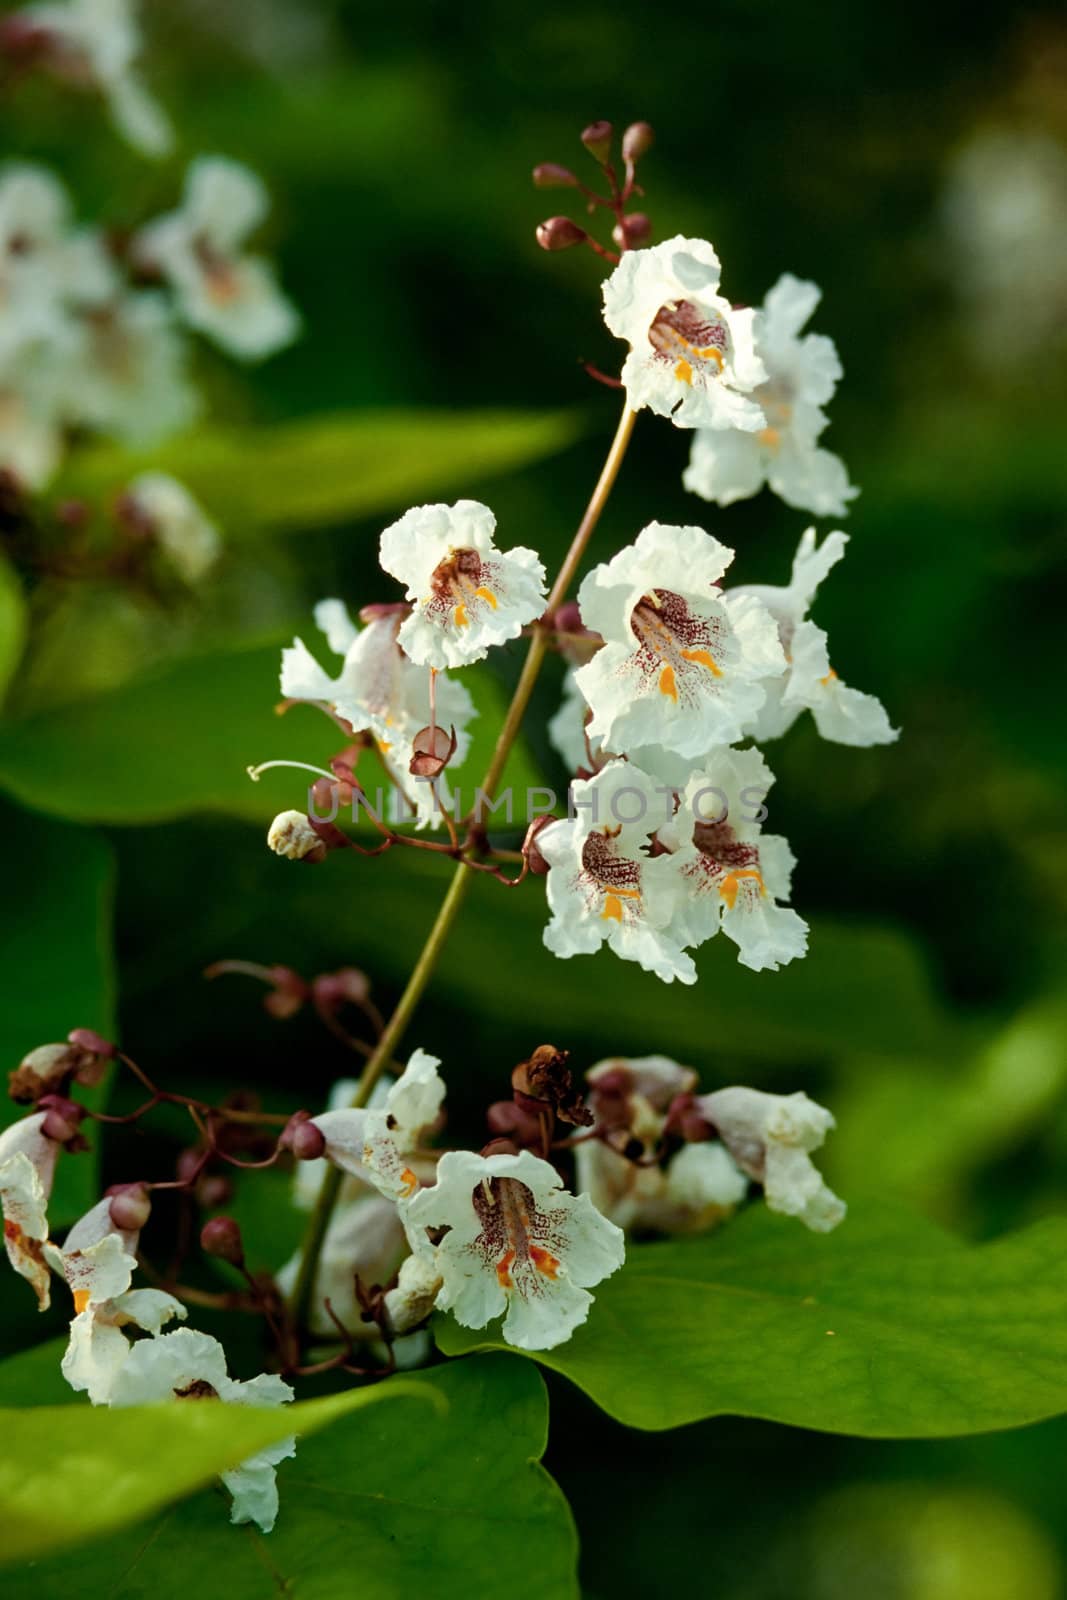 Blossoms of Indian bean tree, Catalpa bignonioides, closeup by PiLens